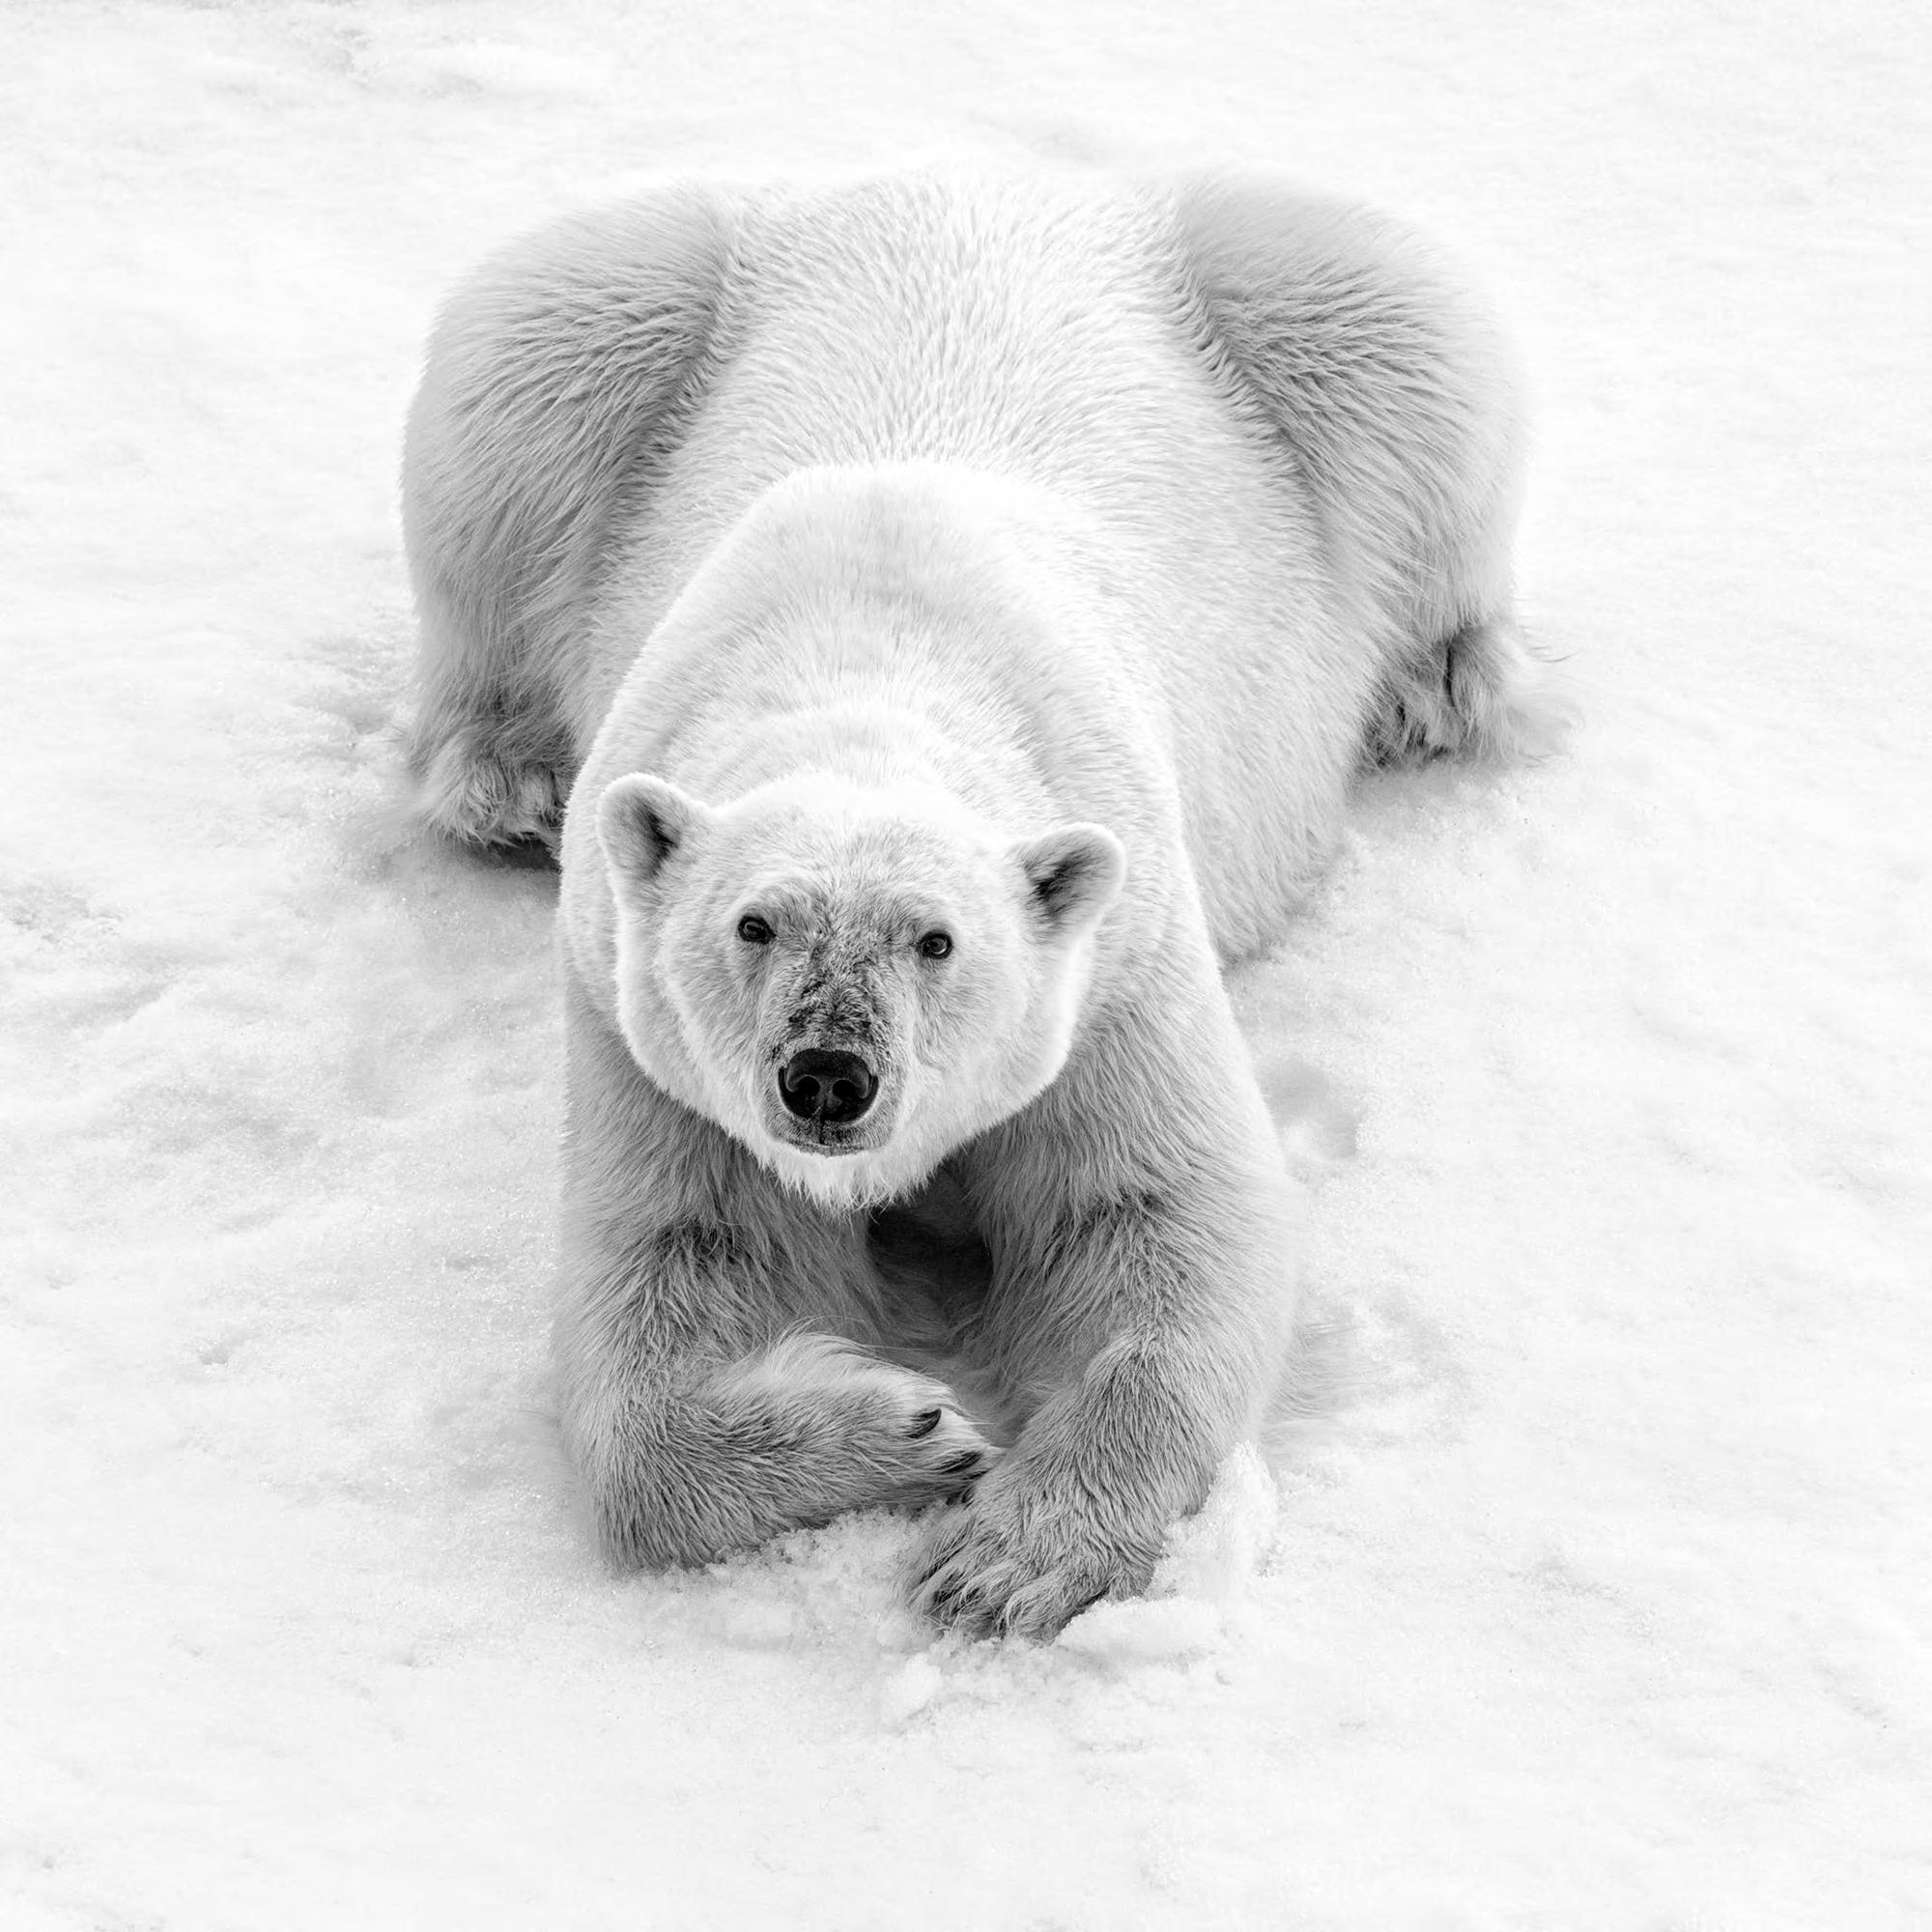 Cristina Mittermeier Black and White Photograph - Polar Master 